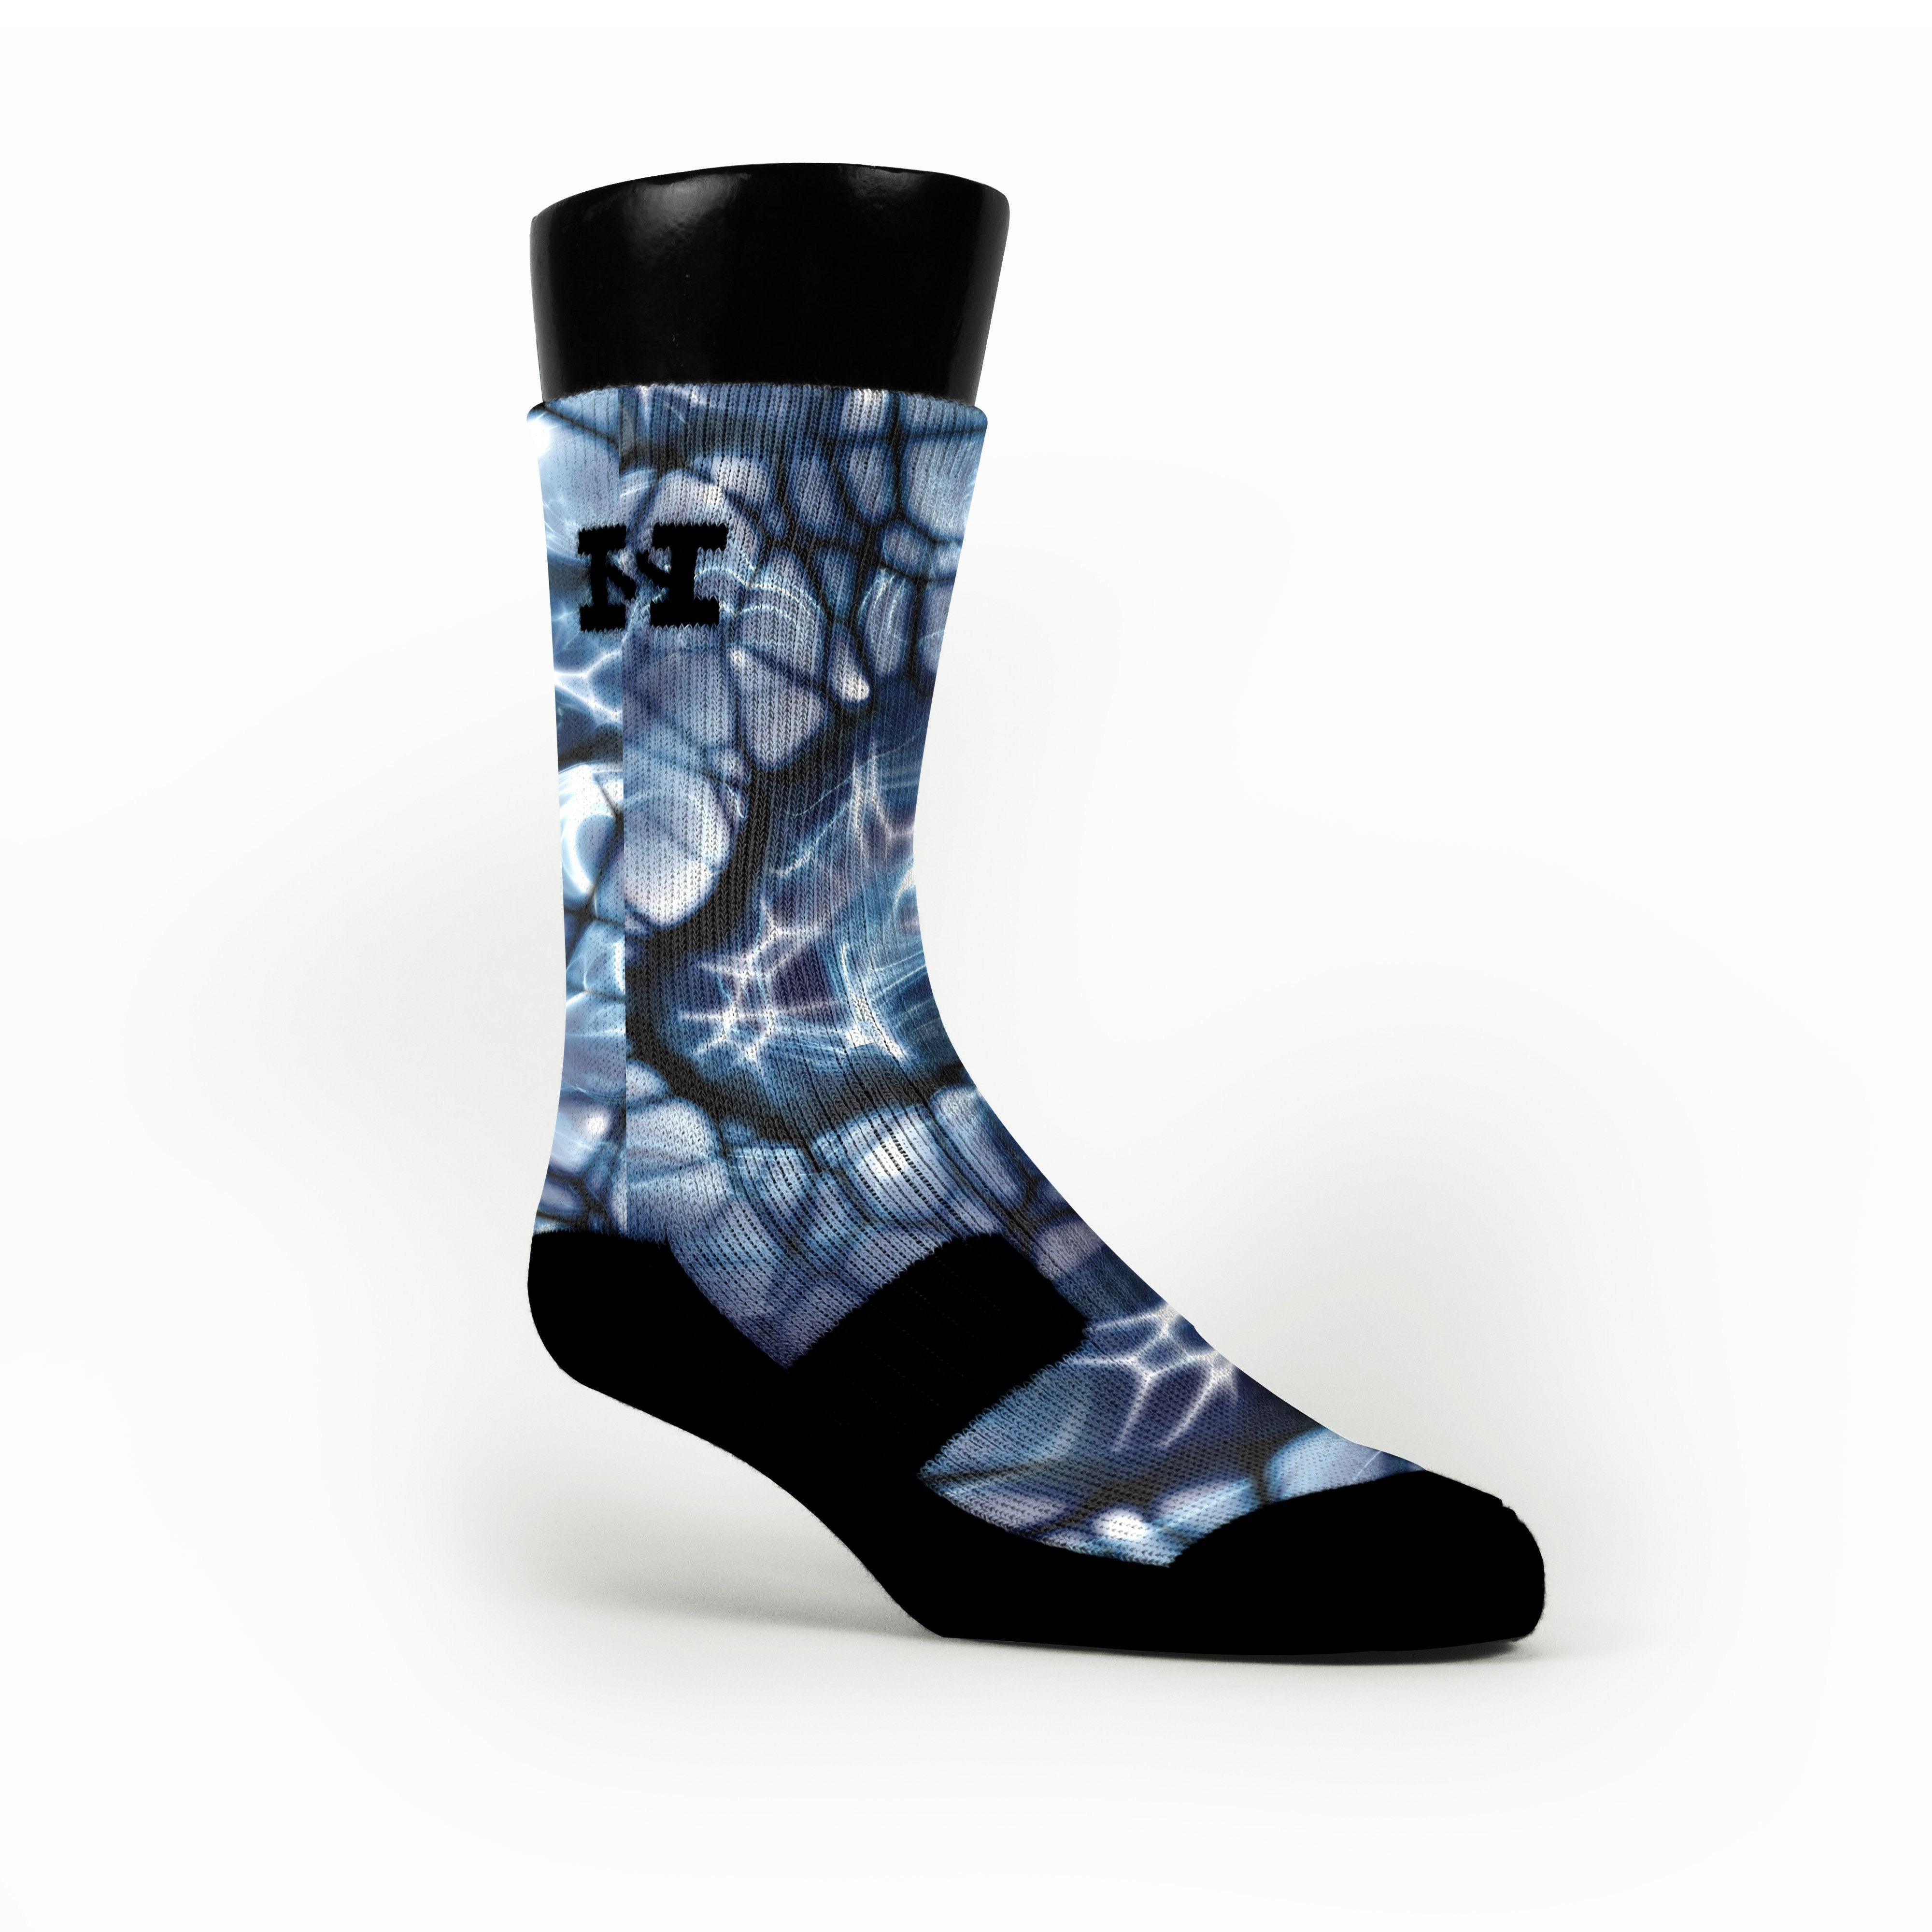 Custom Fire Galaxy Elite Socks / Swaggin' Socks